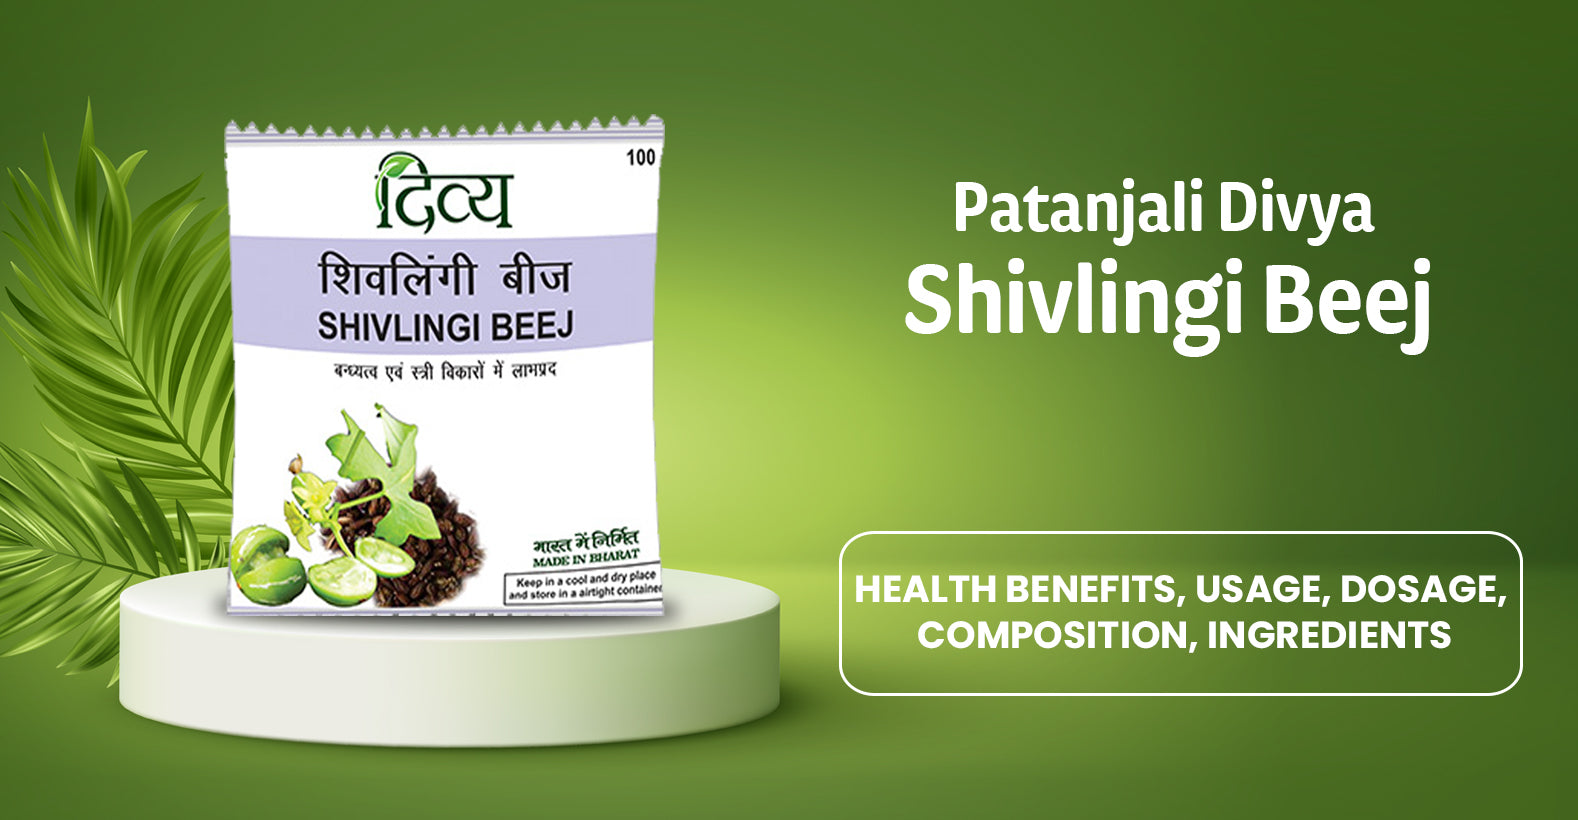 Patanjali Divya Shivlingi Beej - Ingredients, Composition, Health Benefits, Usage, Dosage